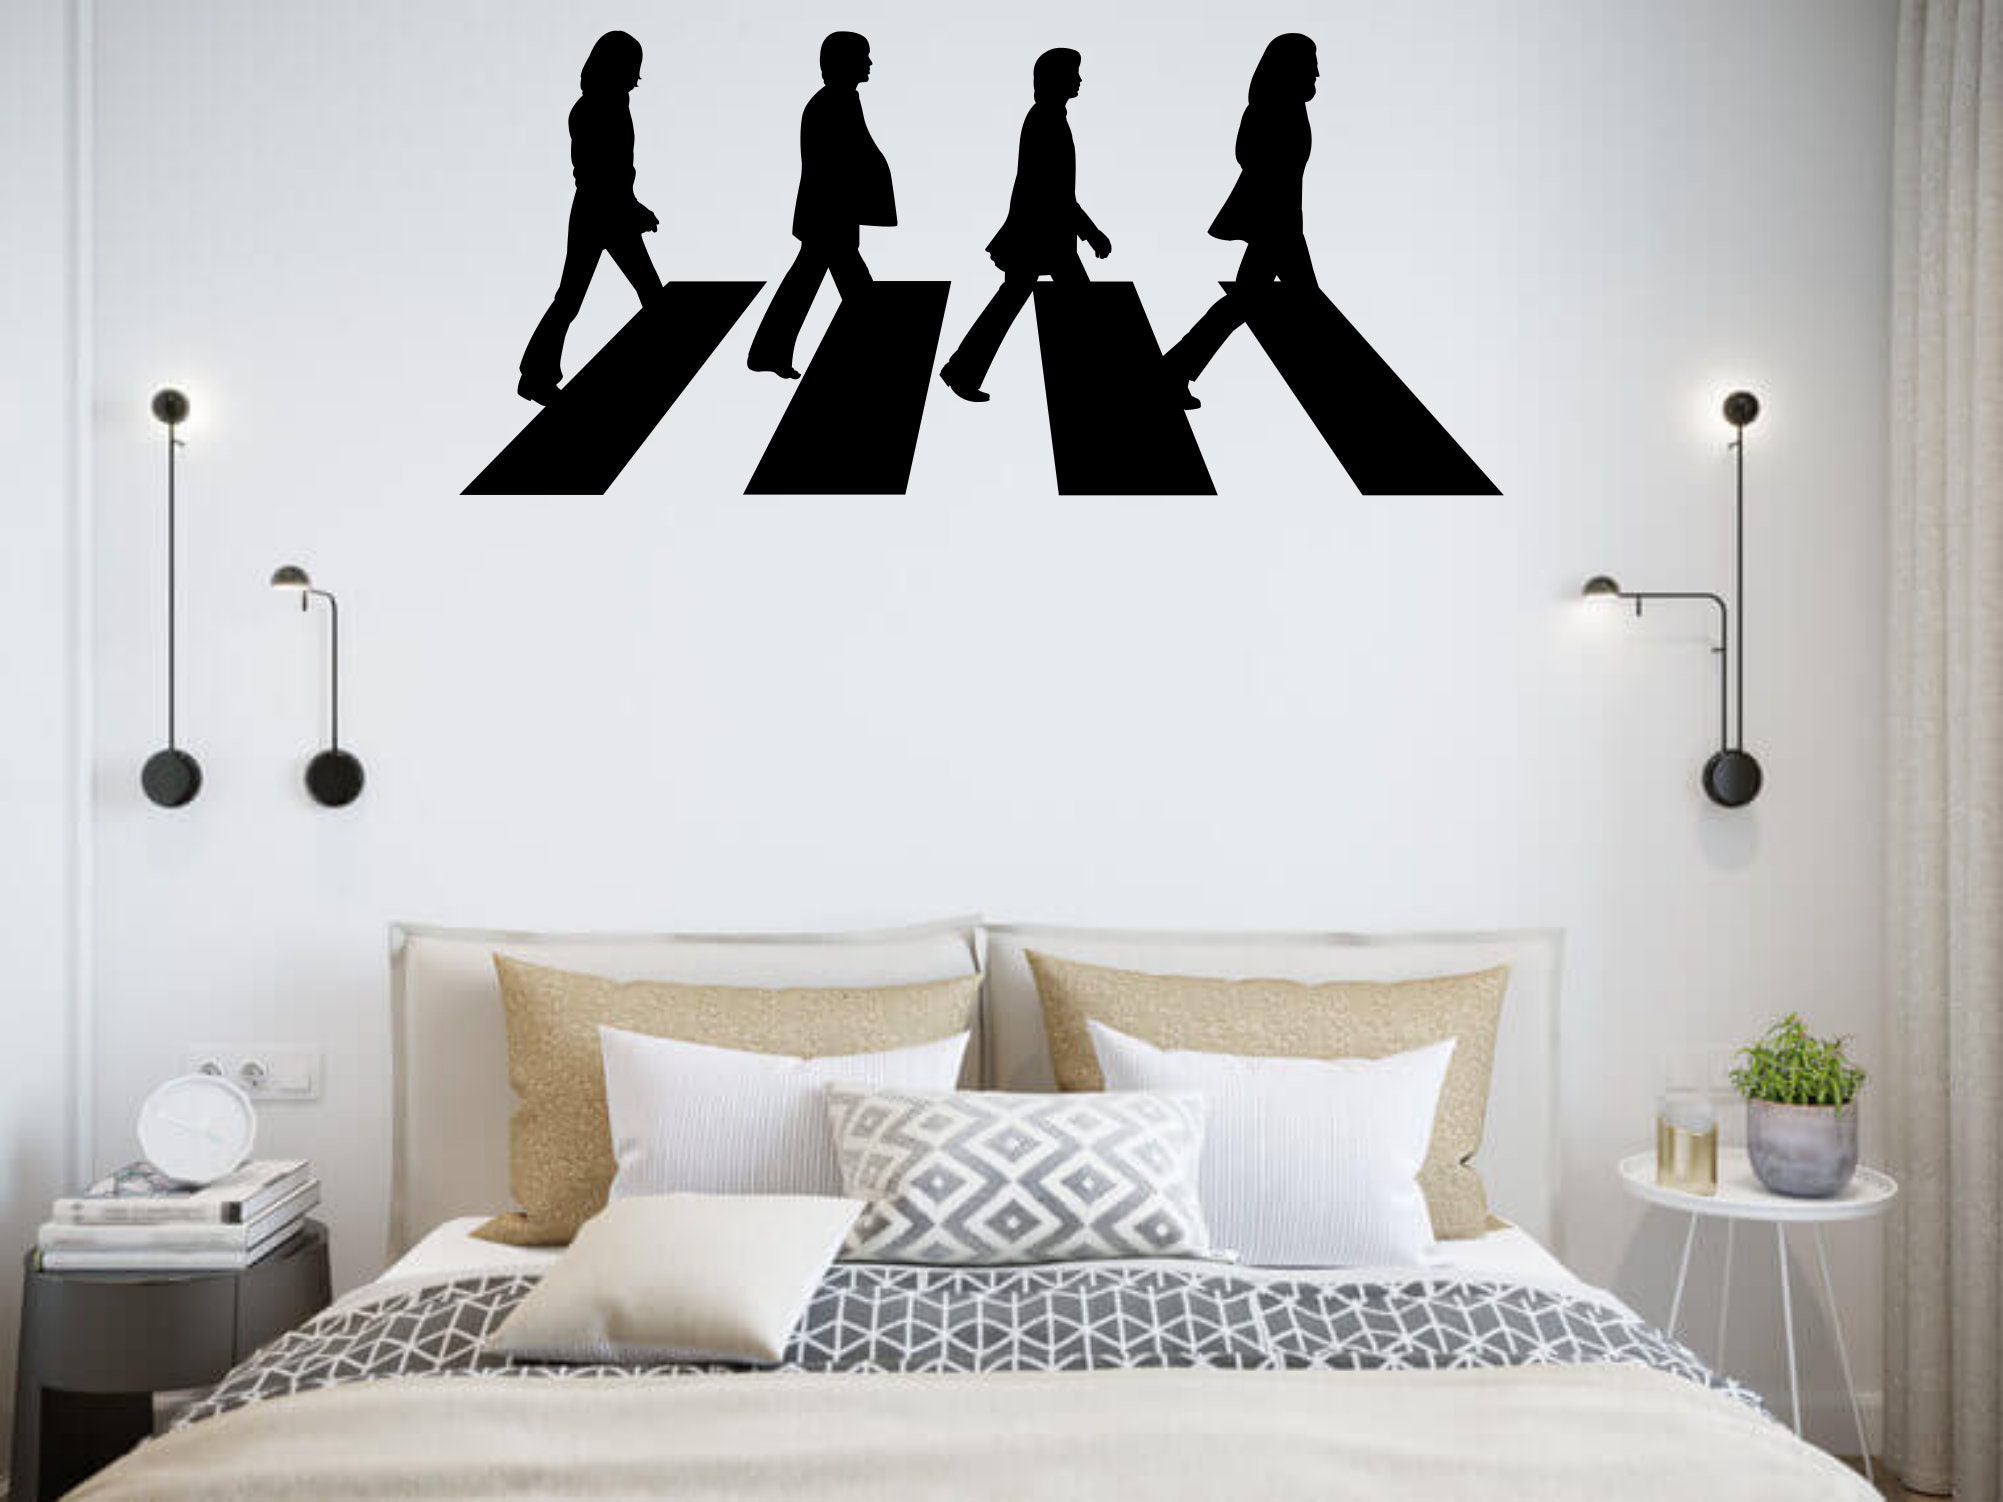 The Beatles Logo Wall Decal Music Band Group Wall Art Vinyl Mural Sticker